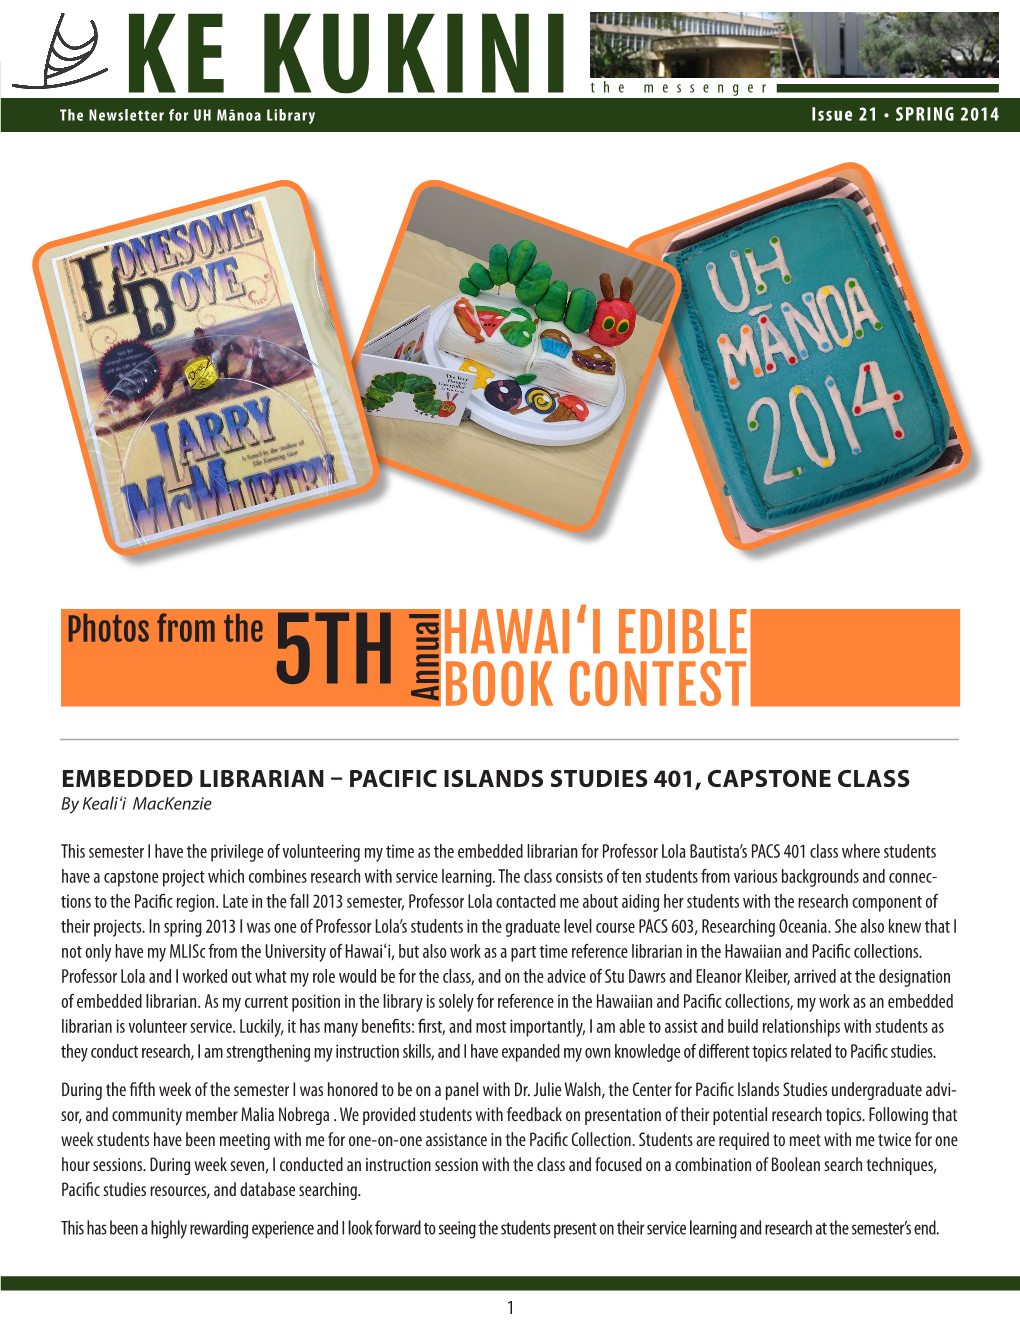 Hawai'i Edible Book Contest